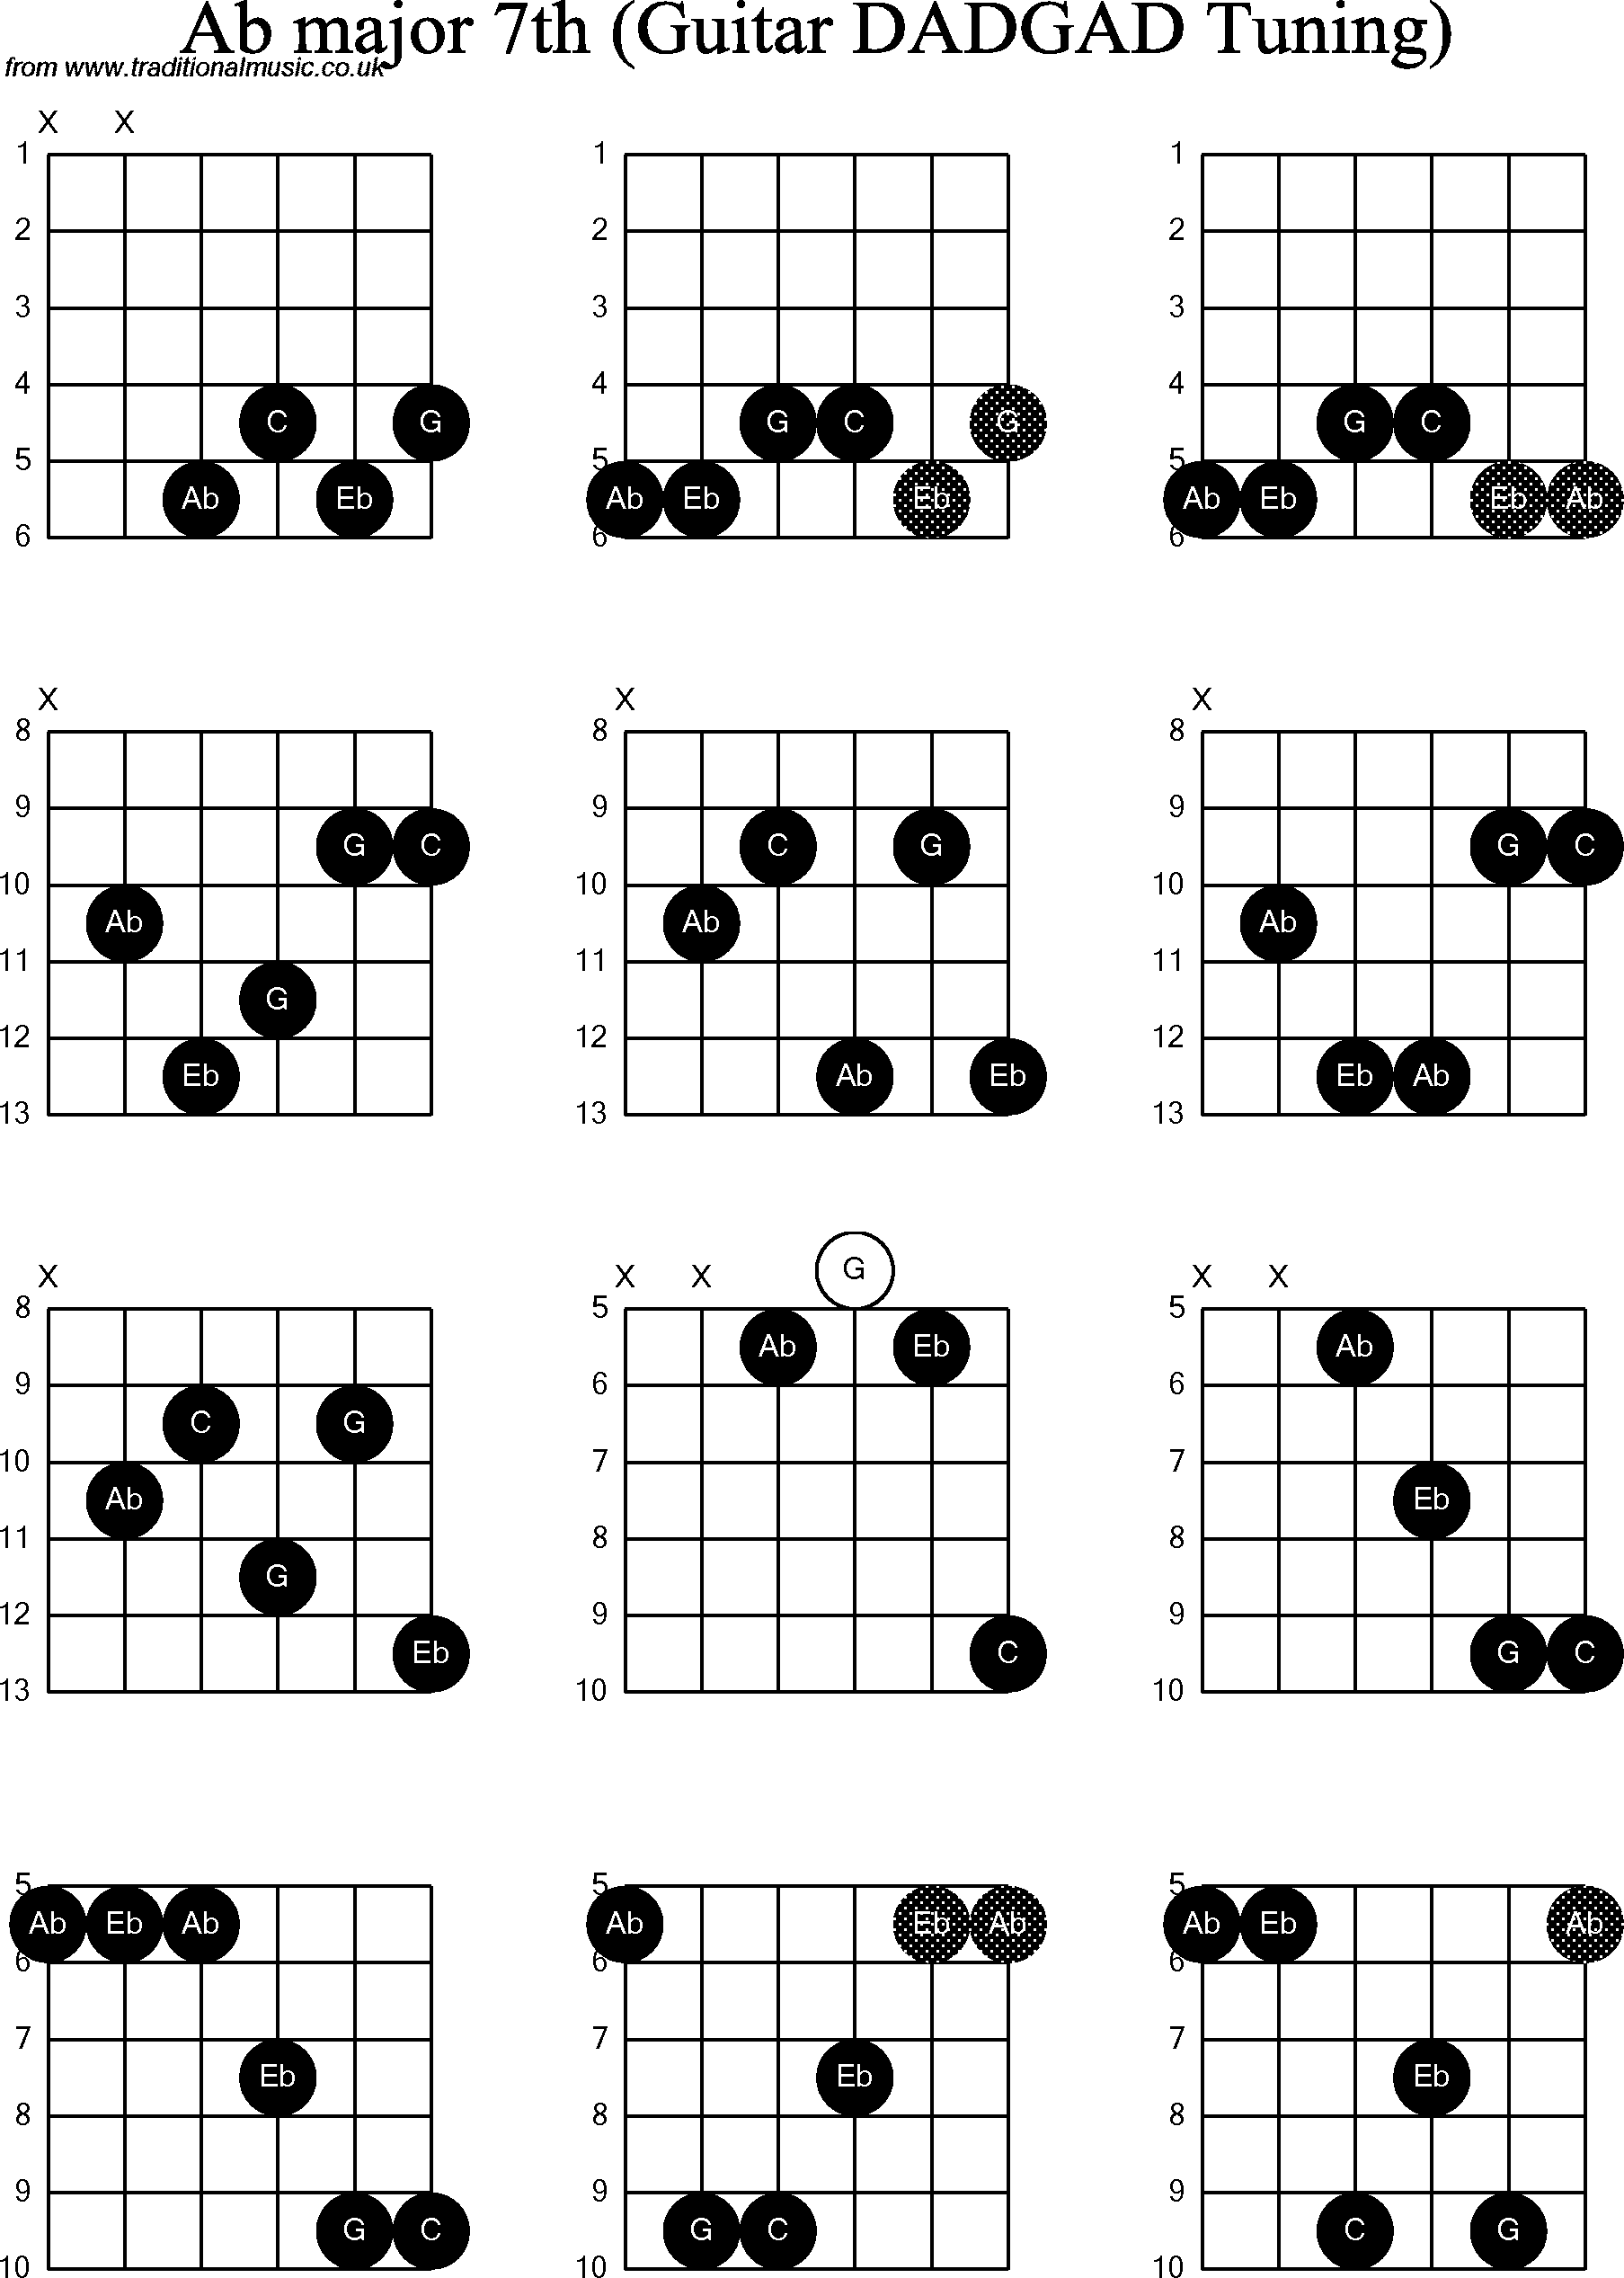 Chord Diagrams for D Modal Guitar(DADGAD), Ab Major7th